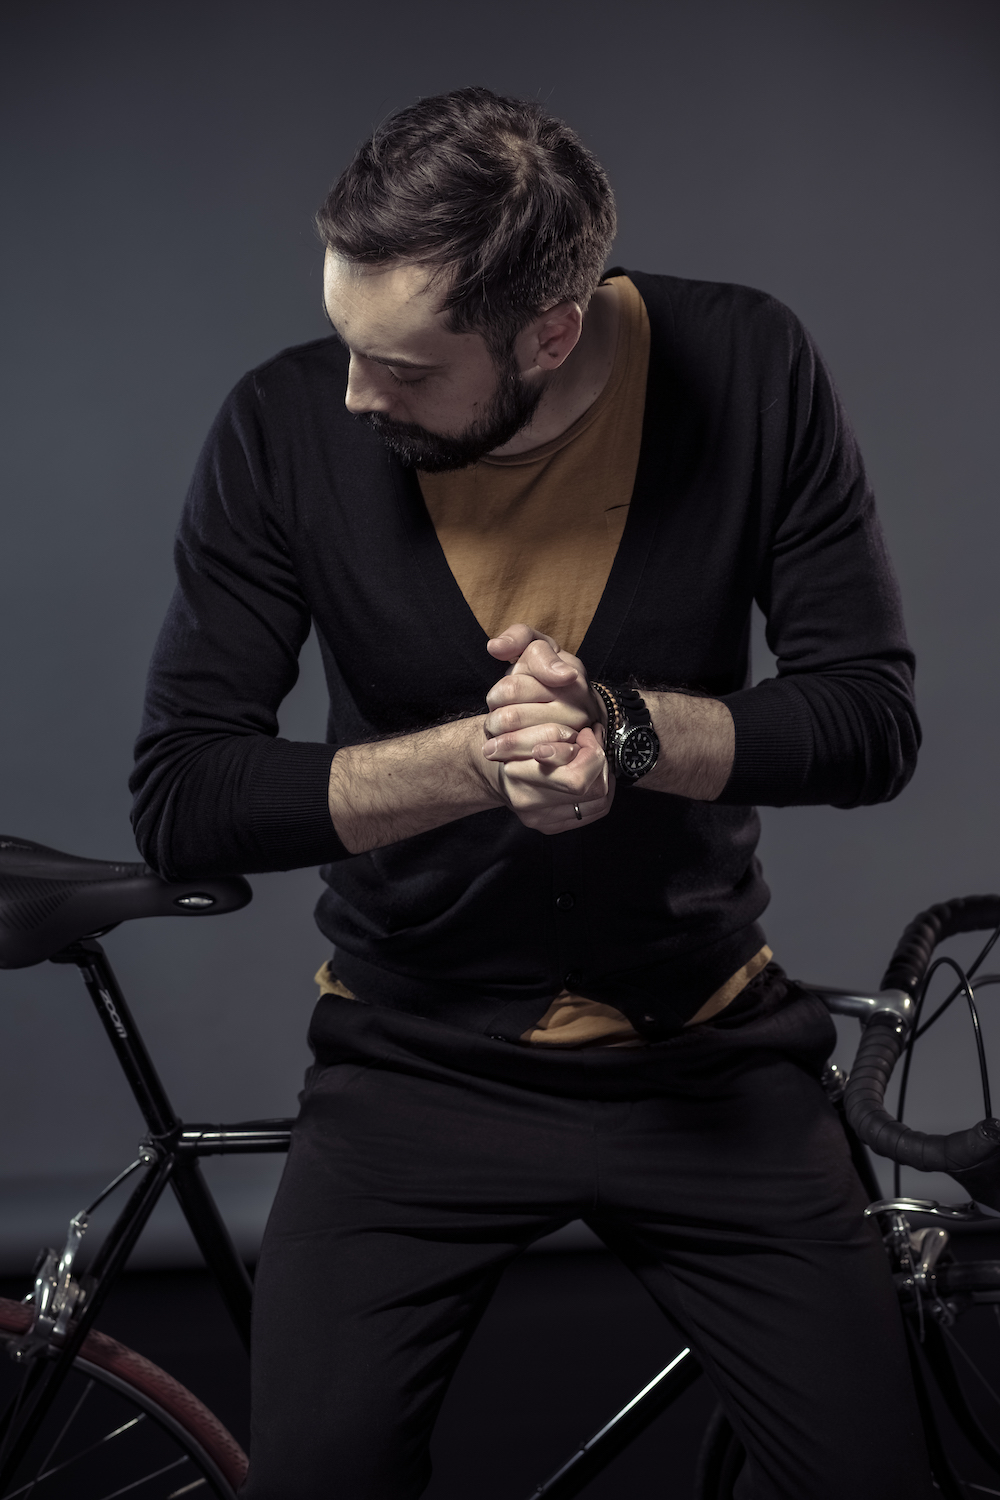 man wearing a black cardigan sitting on a bike